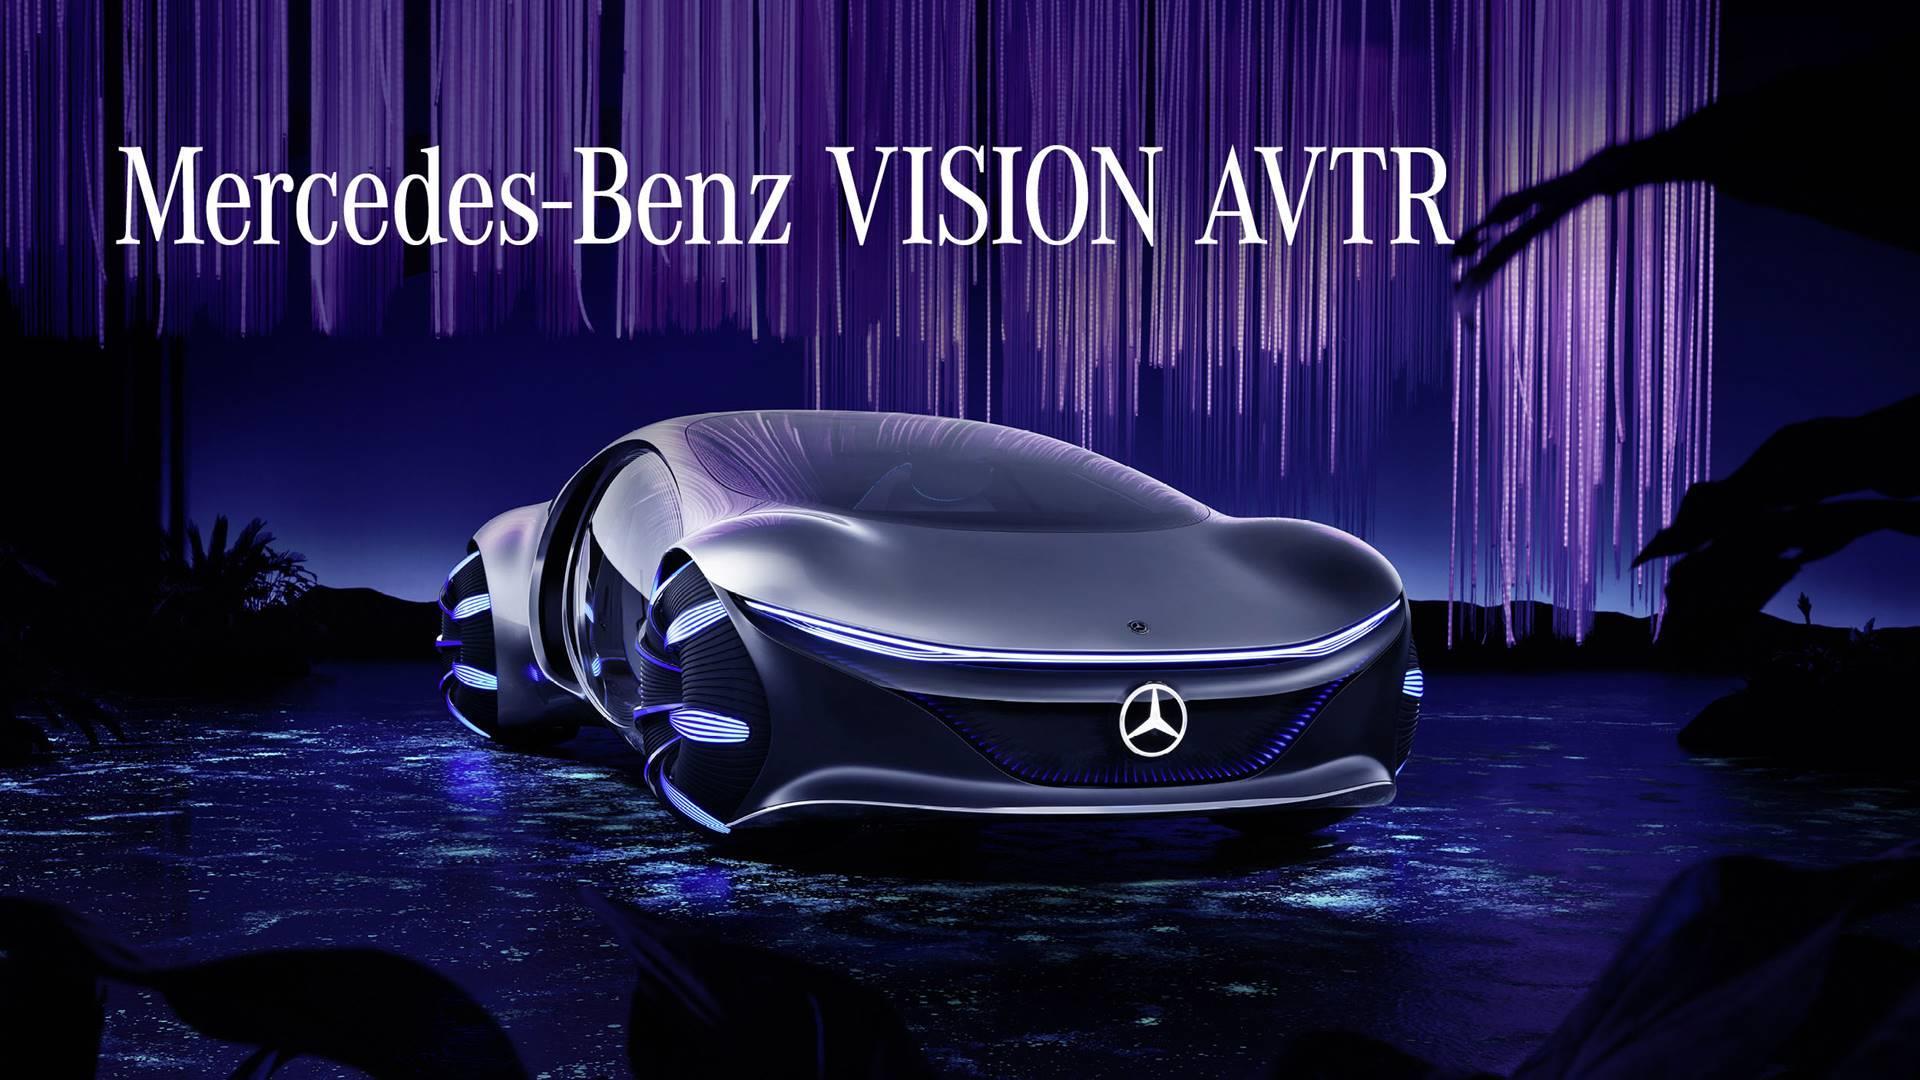 MercedesBenz VISION AVTR Concept Wallpaper and Image Gallery